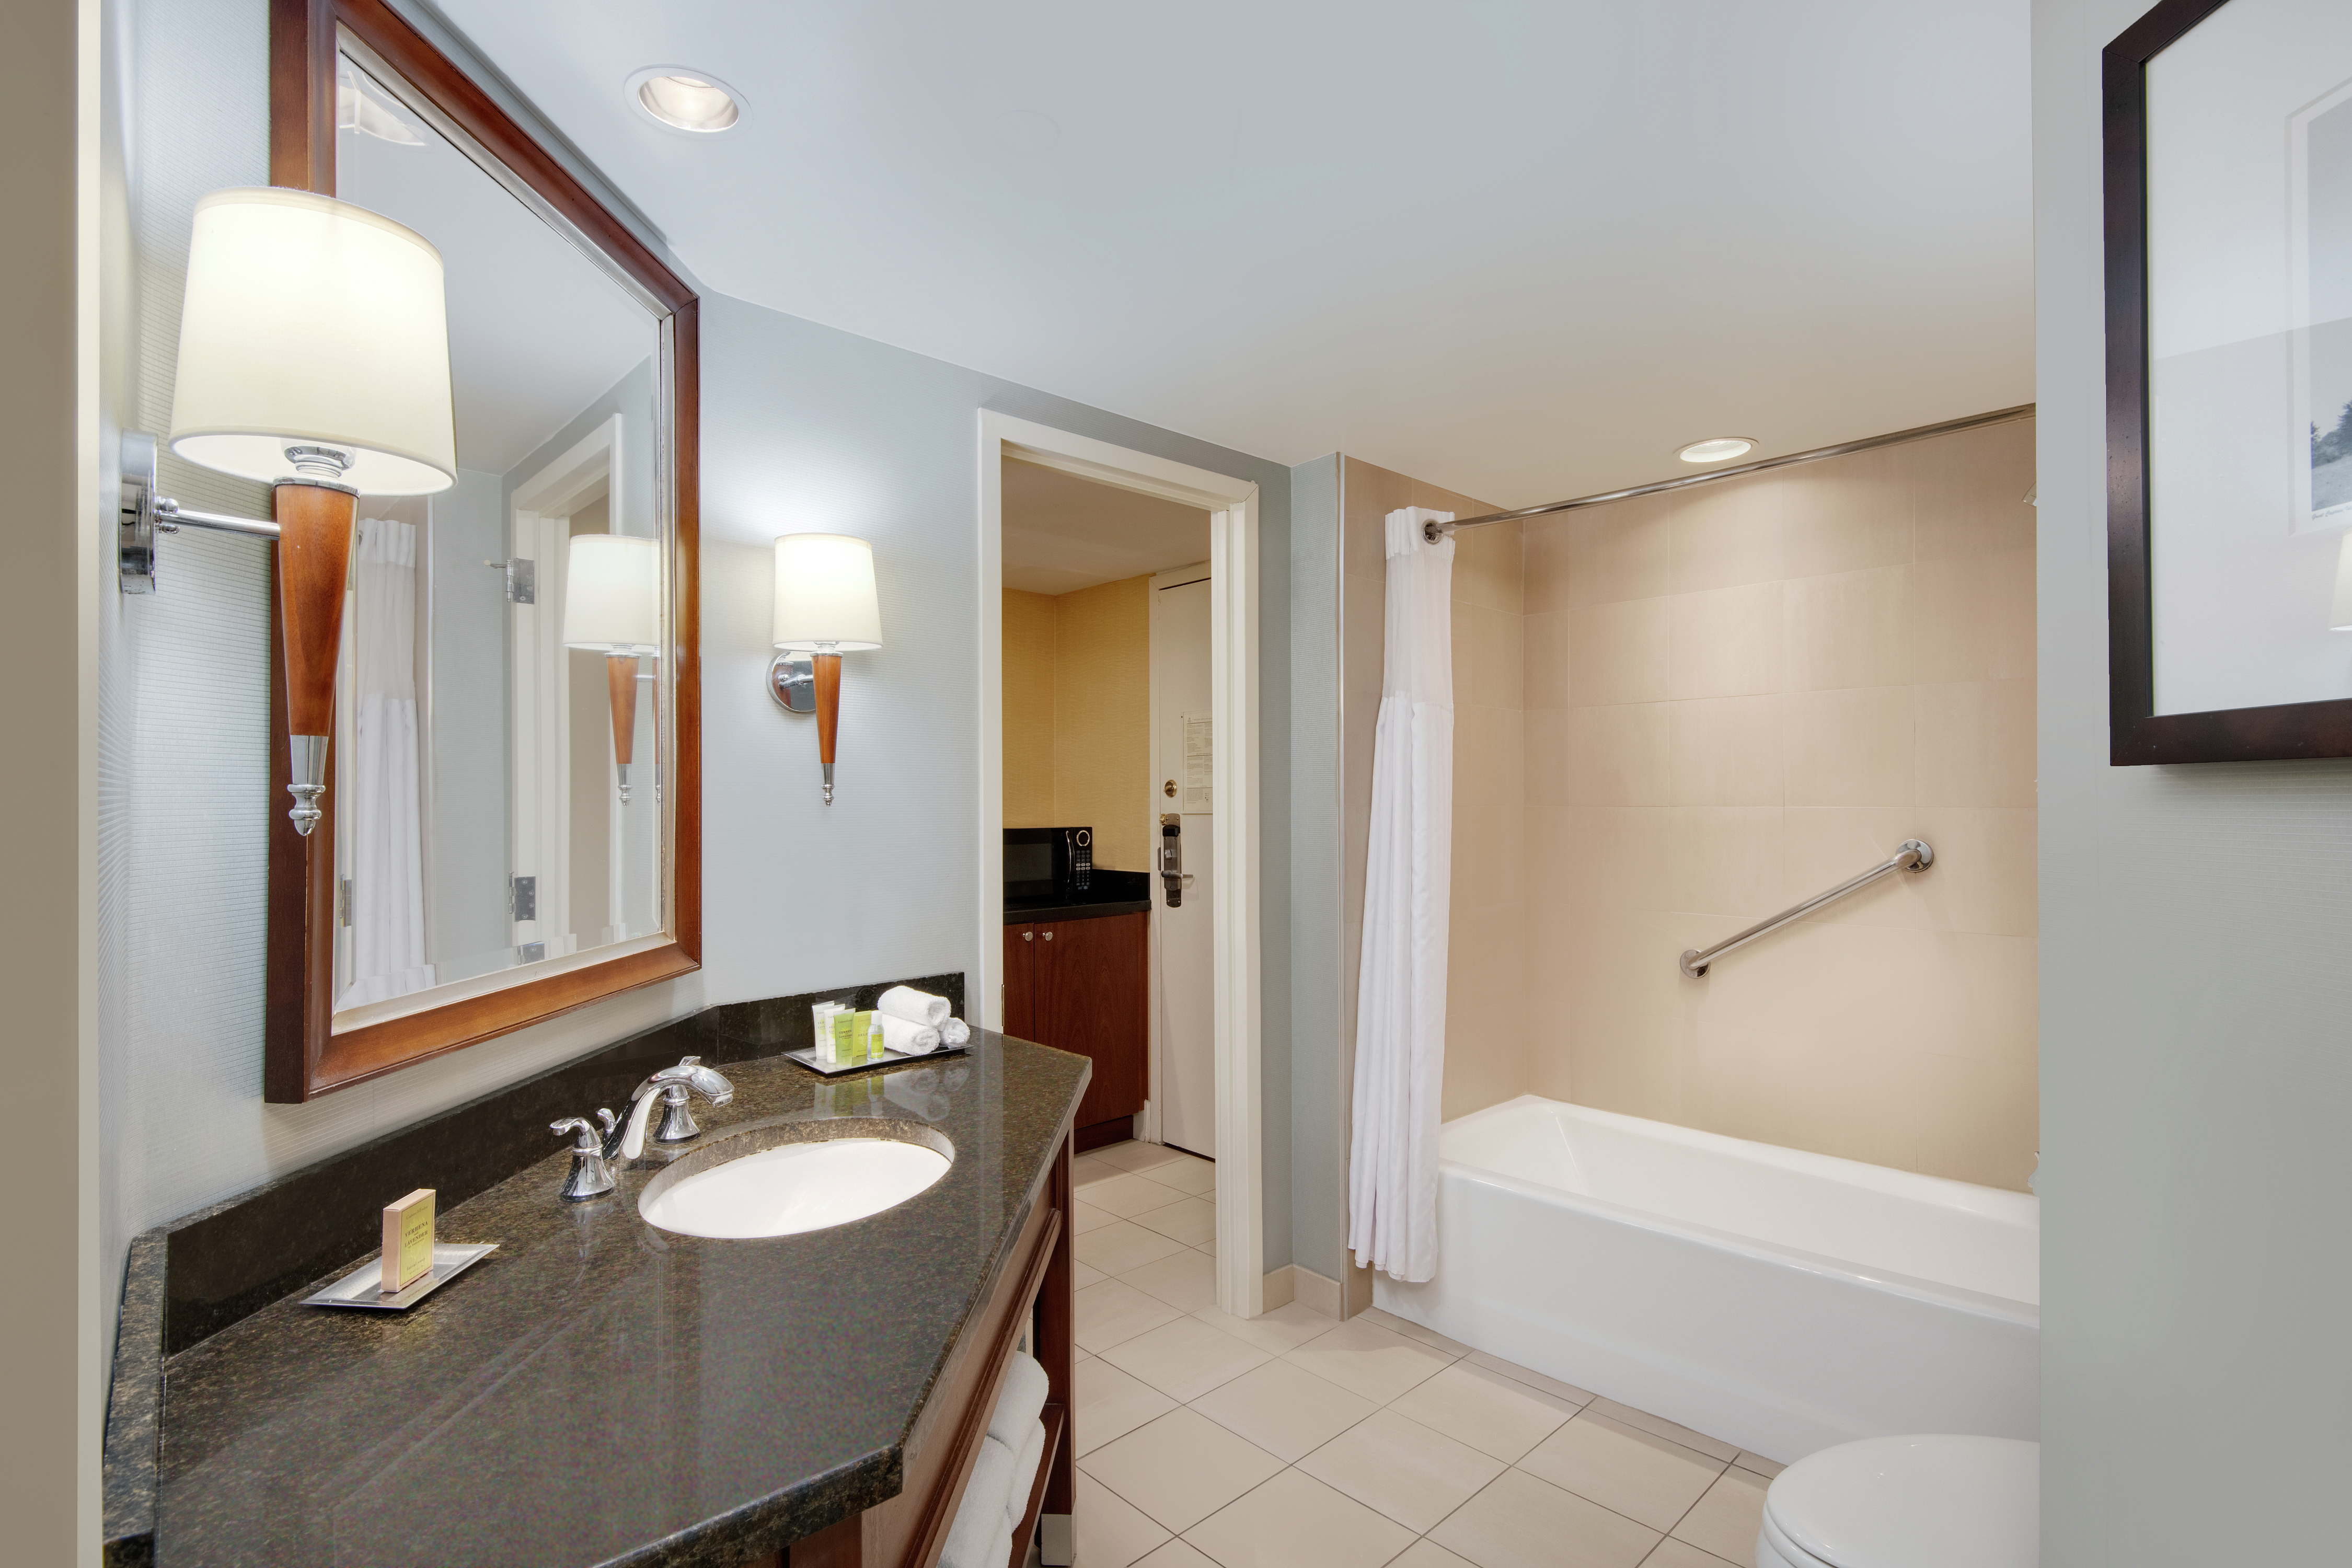 King Suite Guestroom Bathroom with Mirror, Vanity, Bathtub, and Shower